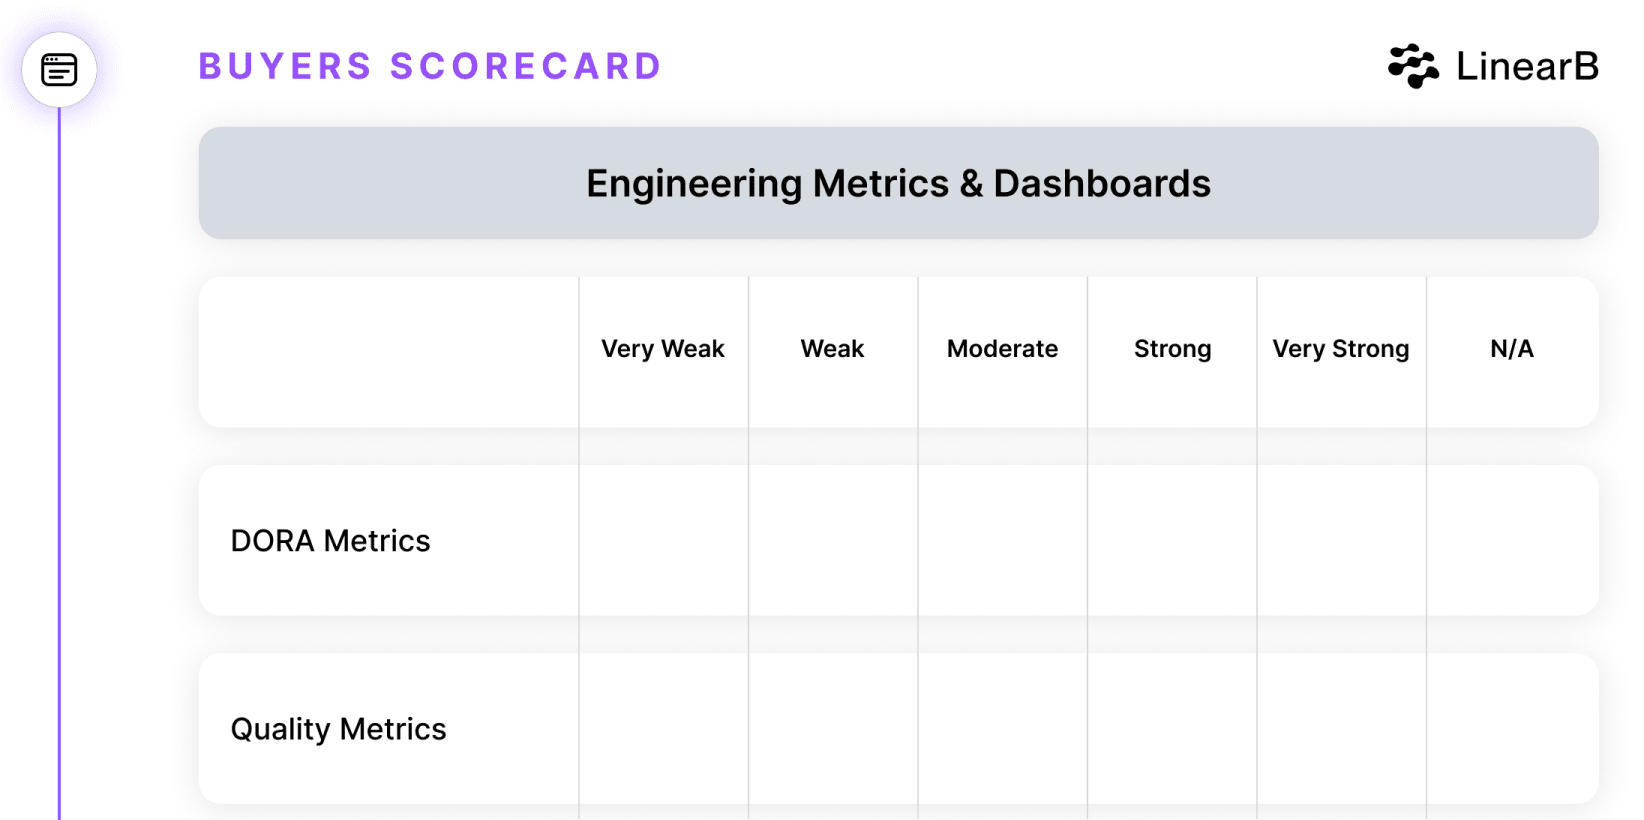 Buyers Scorecard: Engineering Metrics & Dashboards